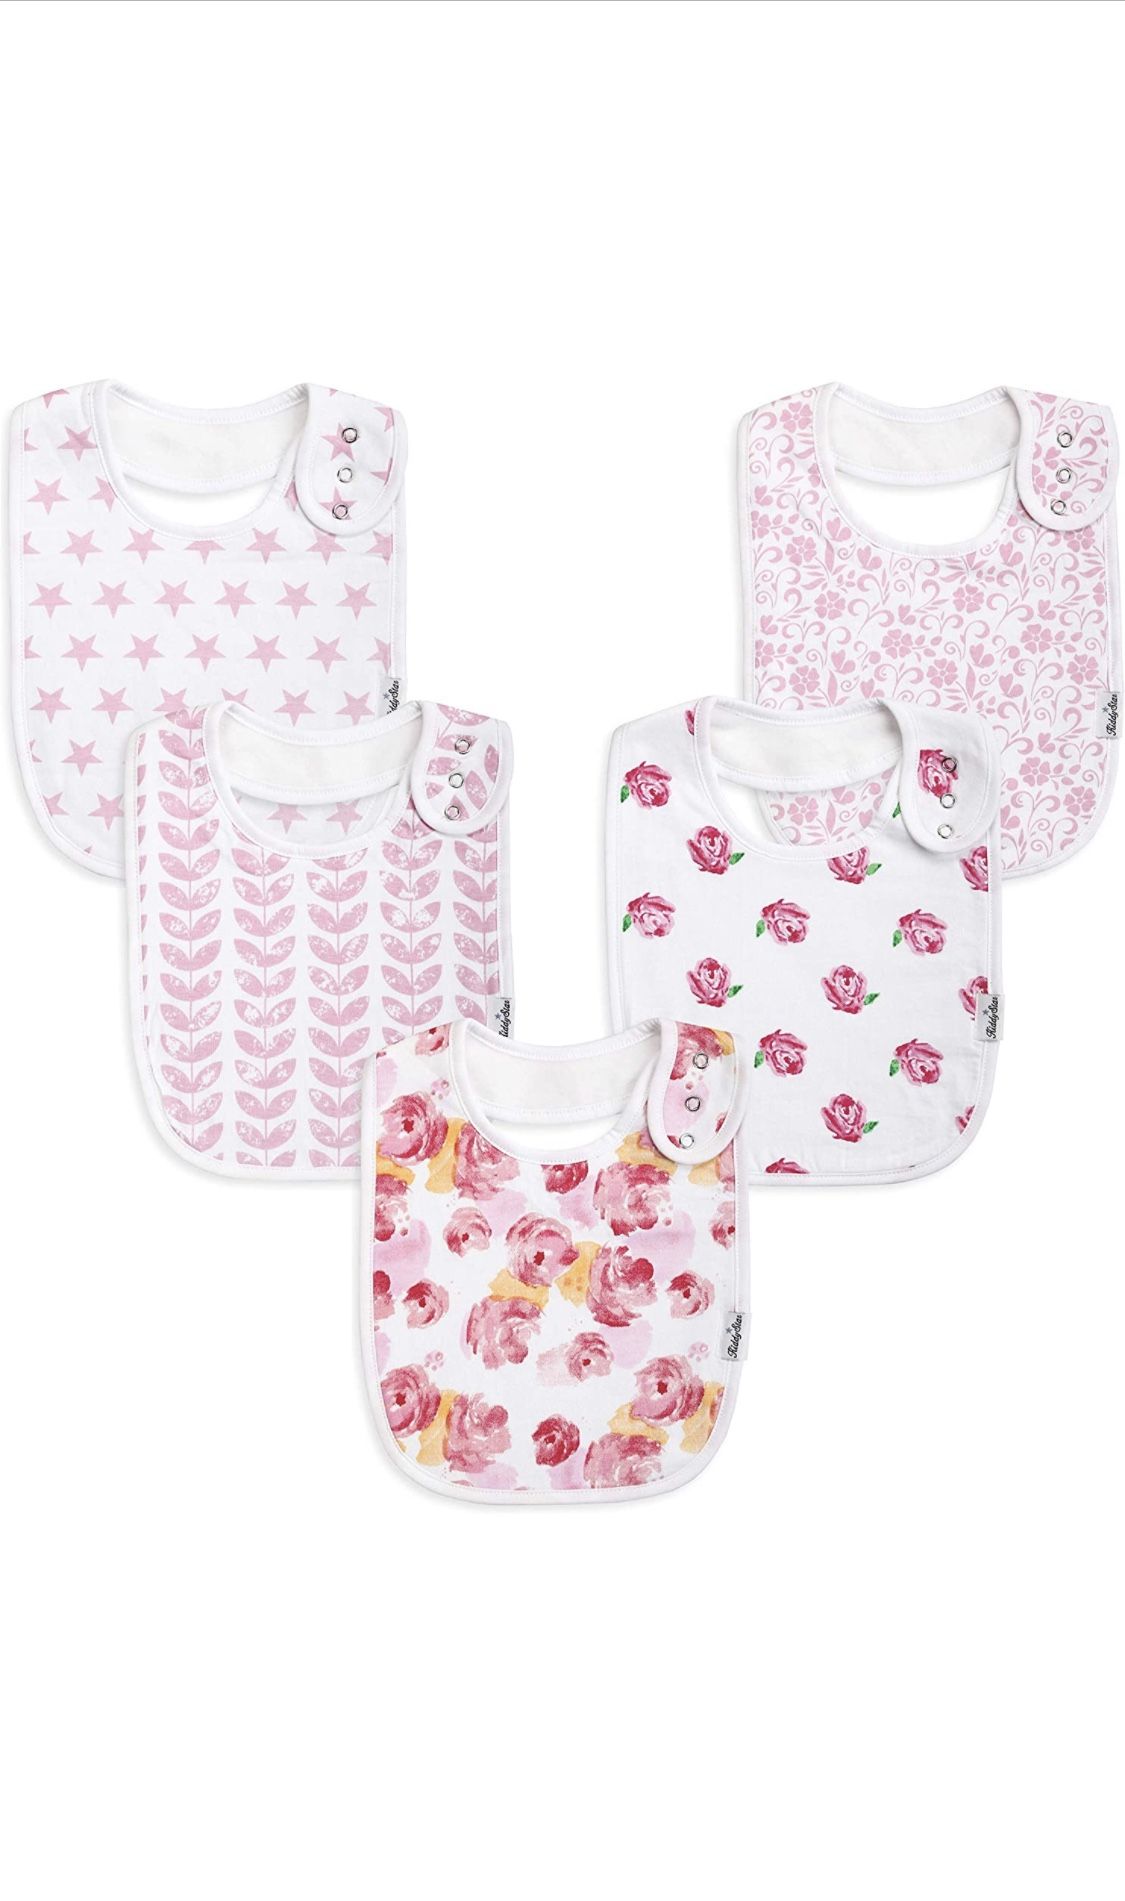 NEW KiddyStar Premium Organic Cotton Toddler Extra Large Bibs 5-pack